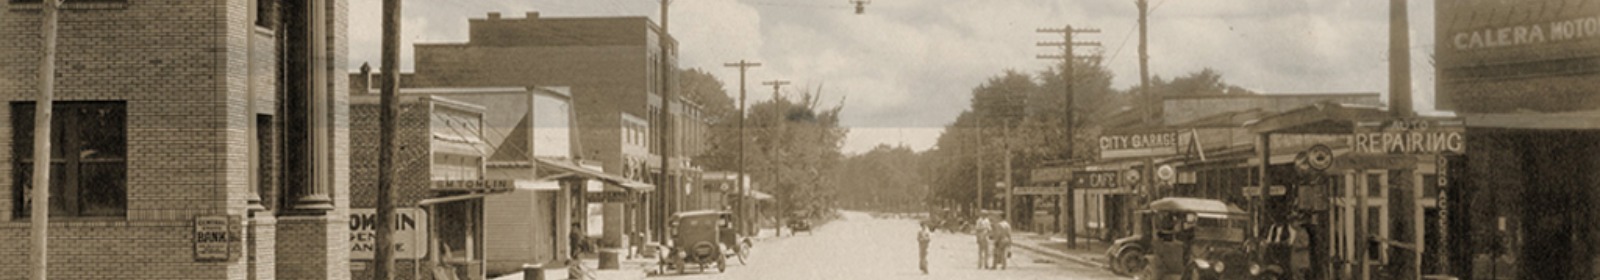 history old downtown photo of Calera, Alabama